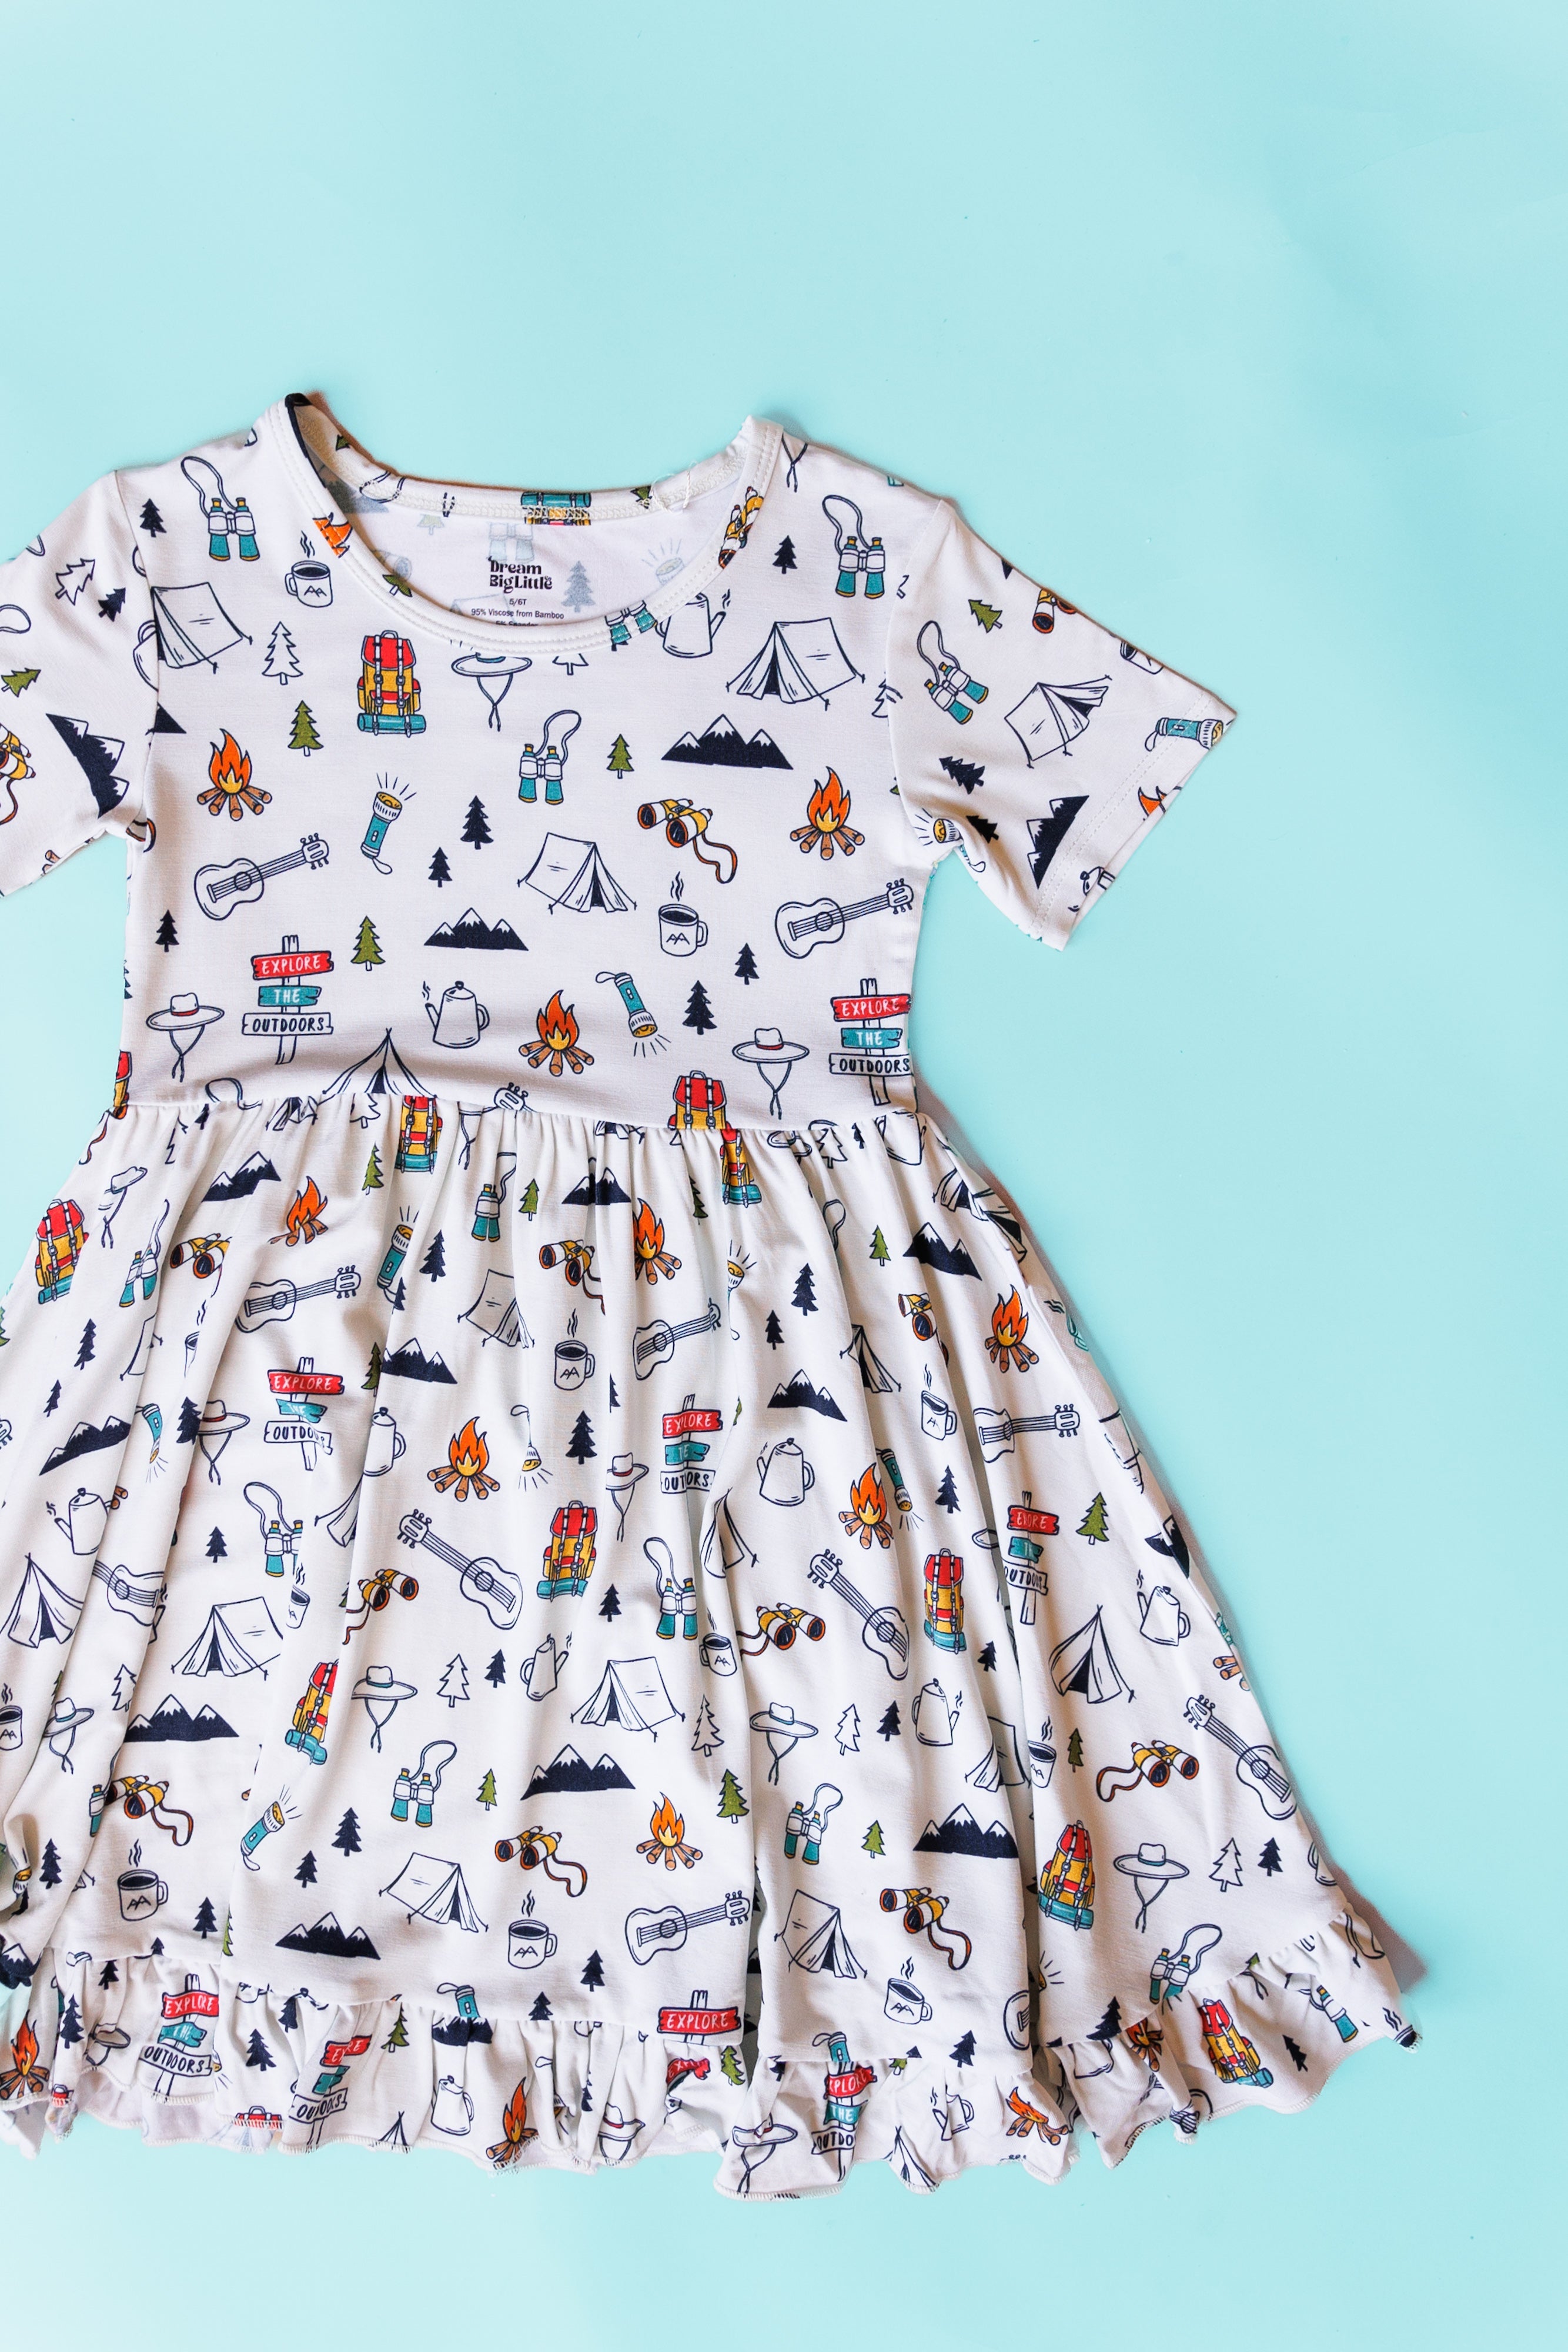 Explore The Outdoors Dream Ruffle Dress